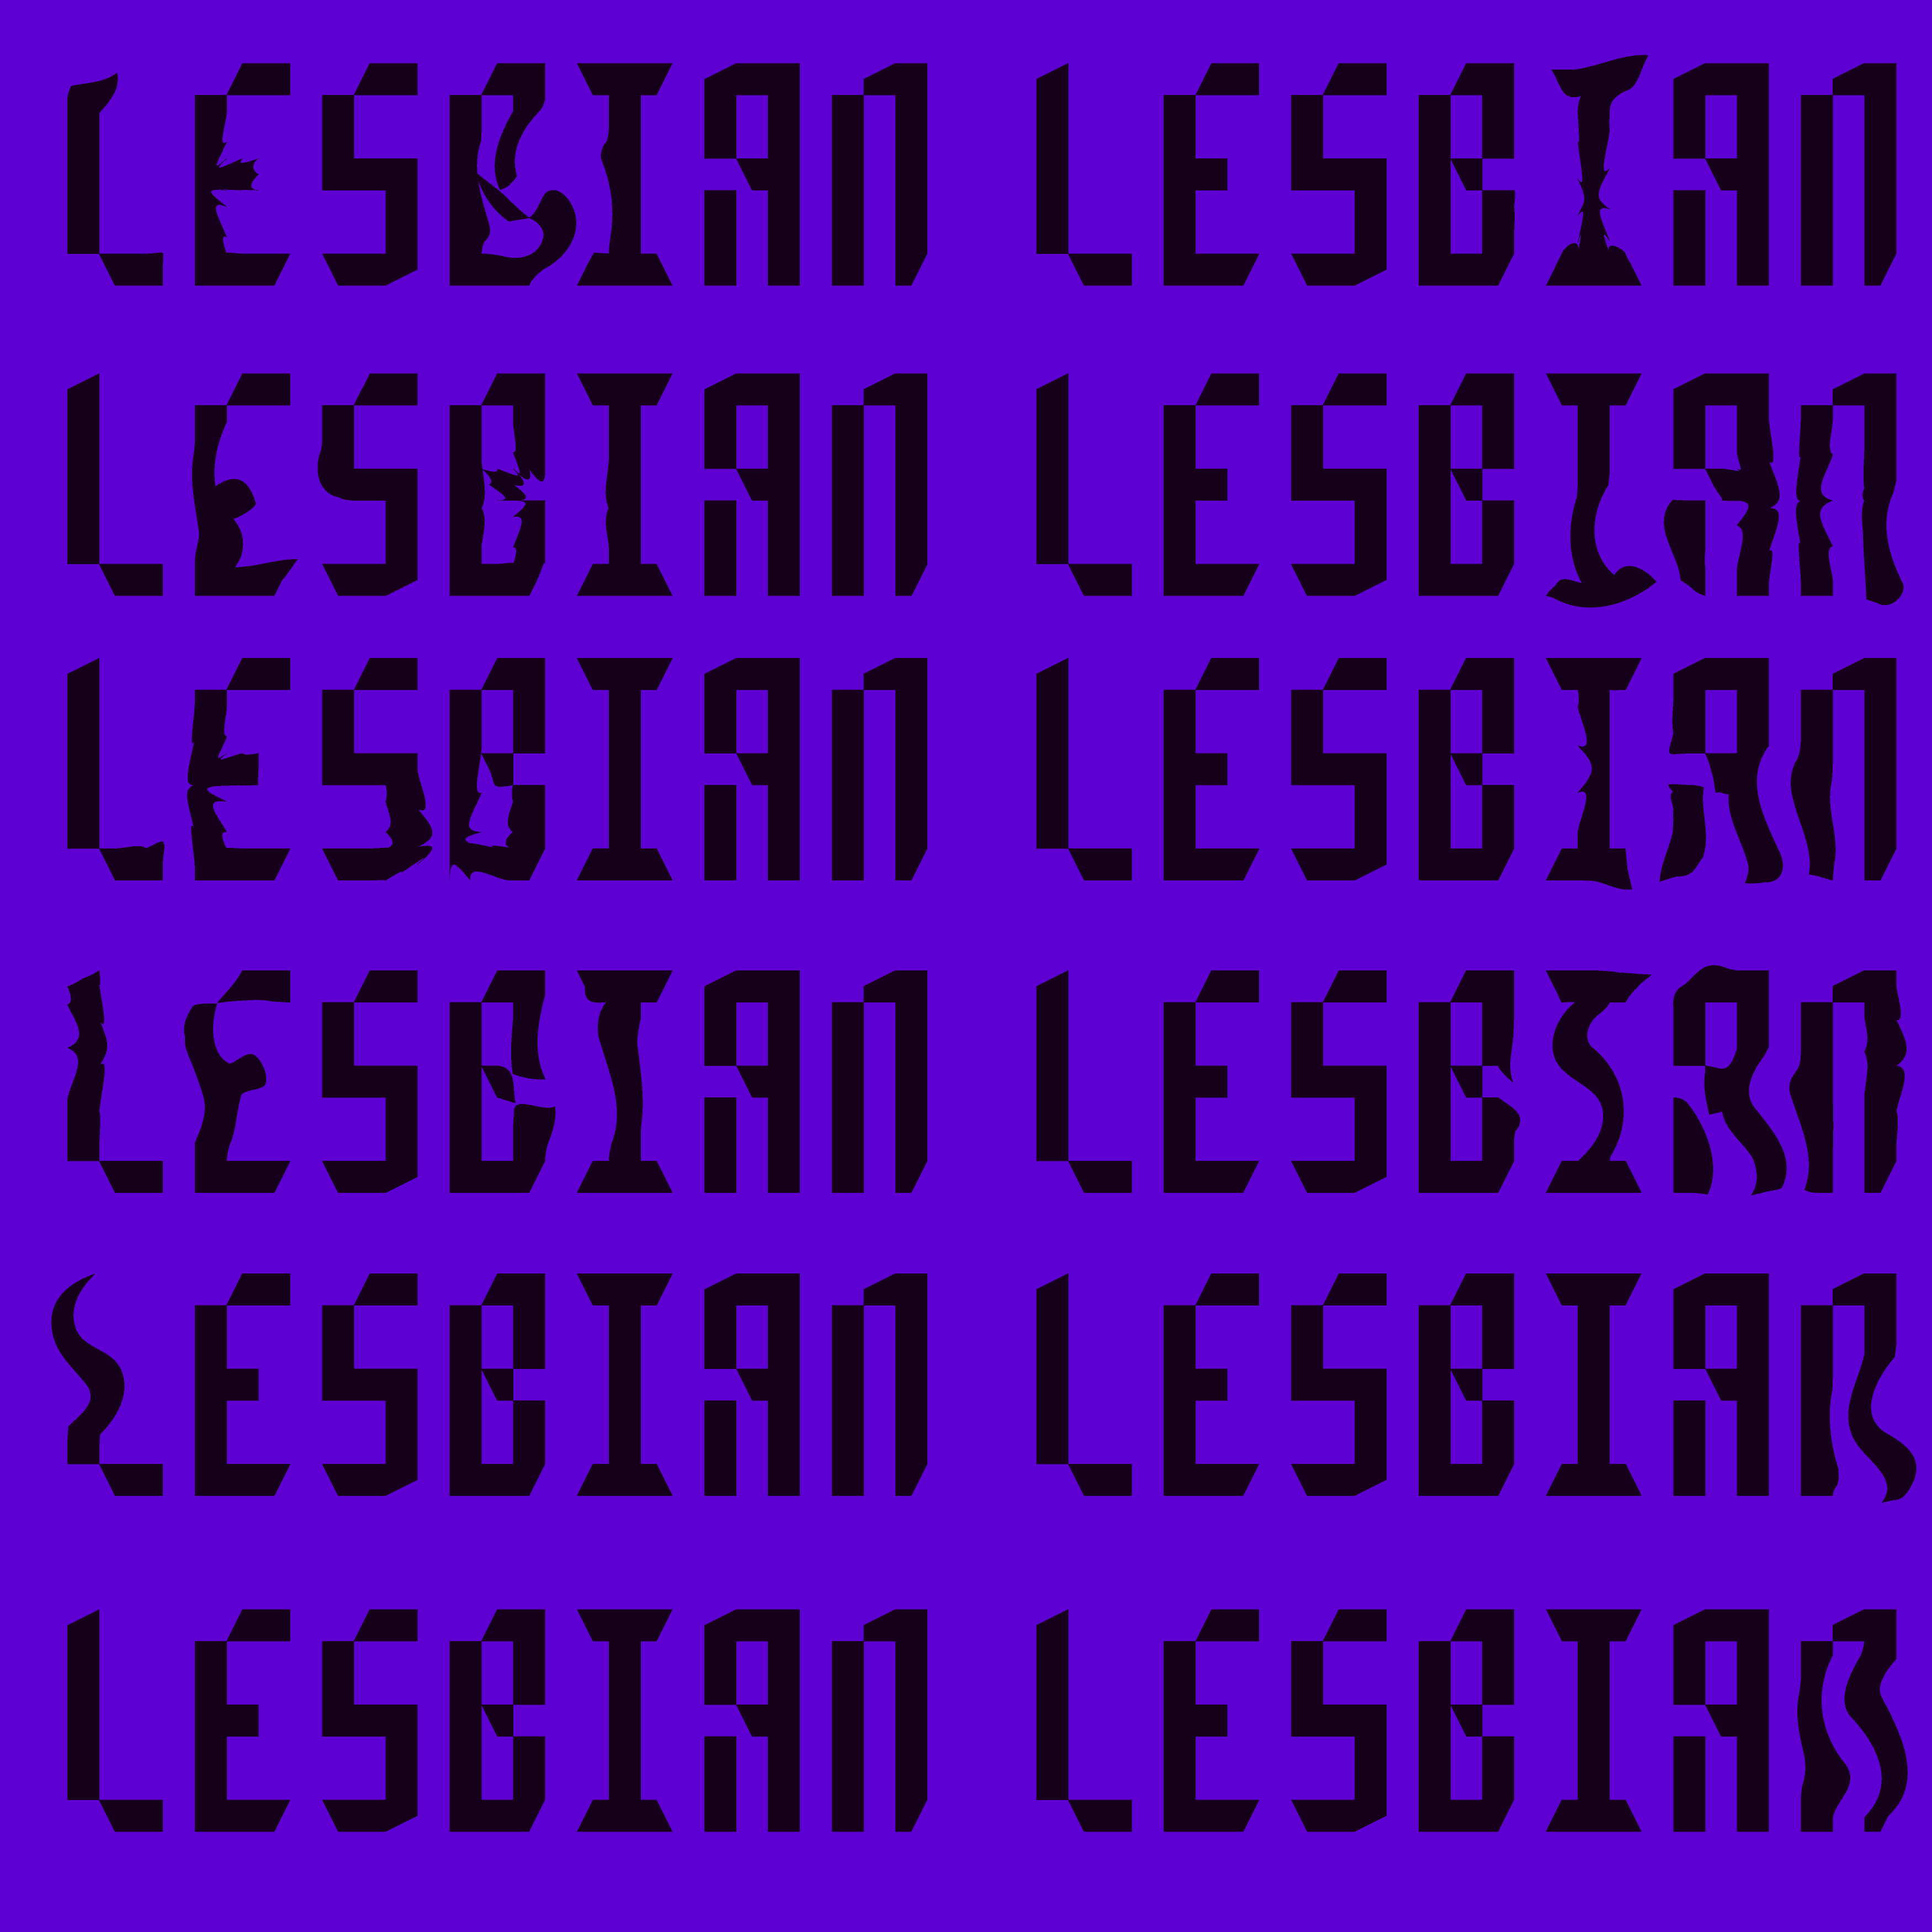 a_lesbian banner